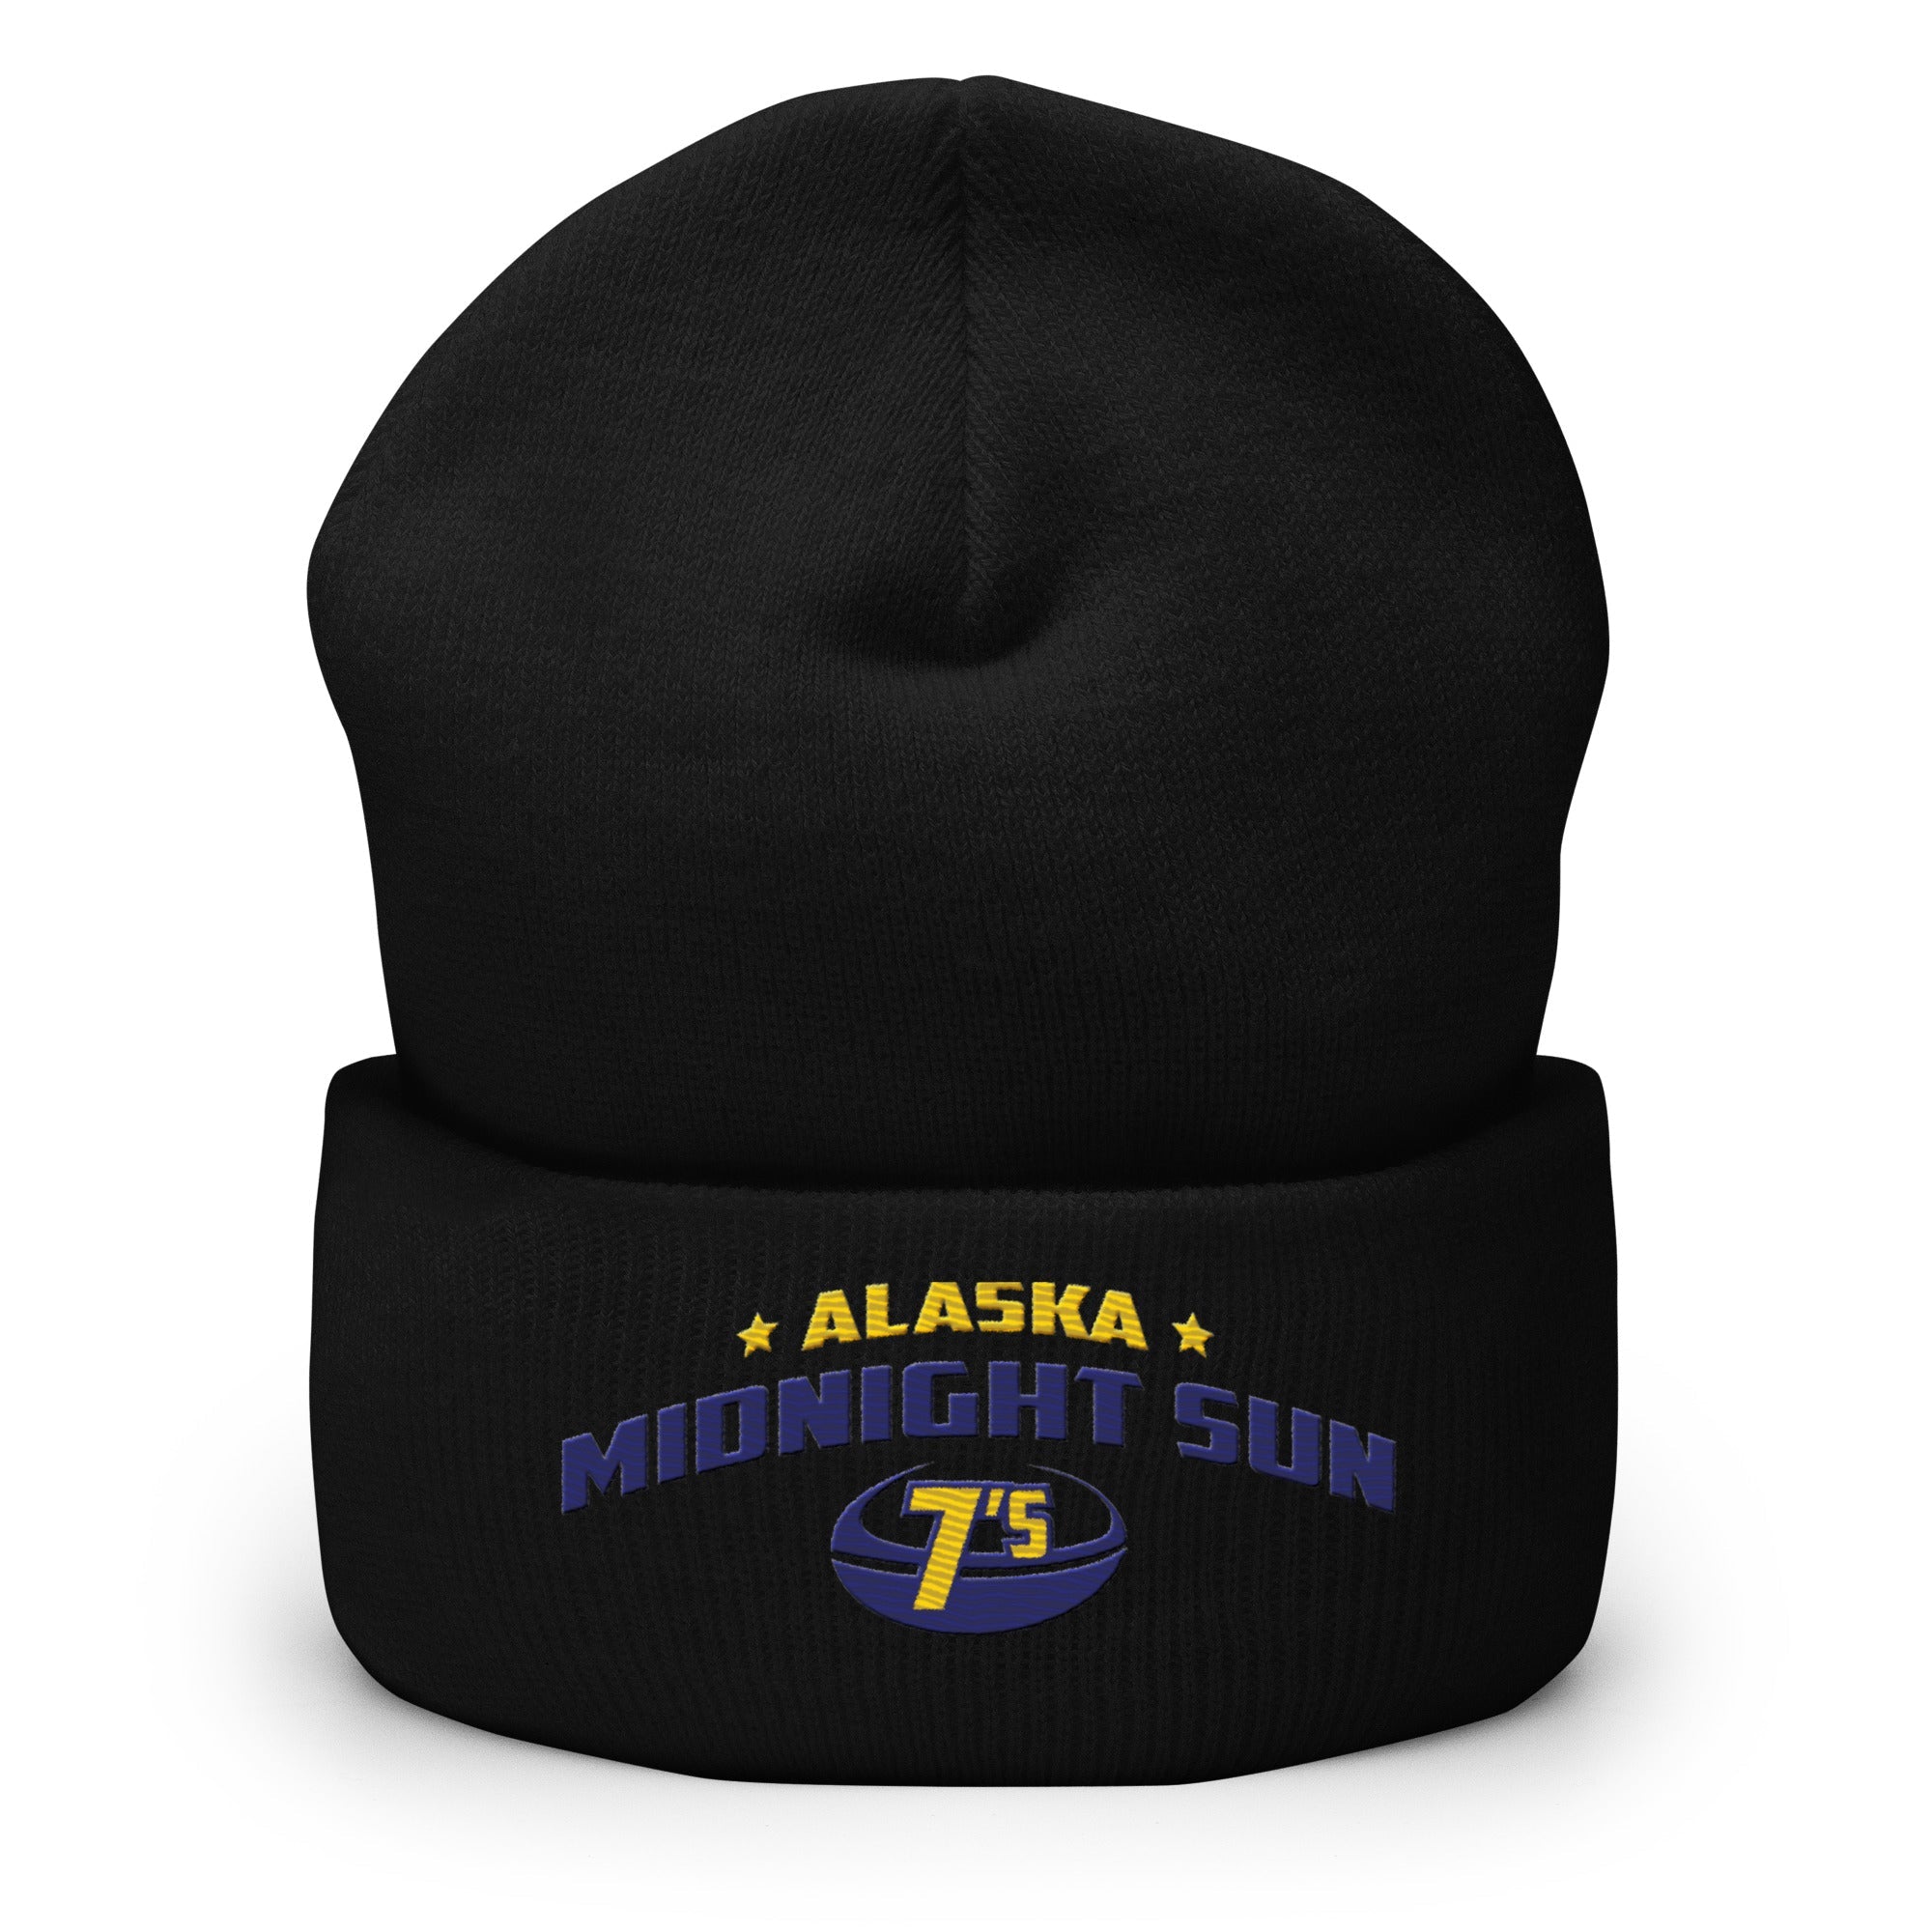 Rugby Imports Alaska Midnight Sun 7's Cuffed Beanie